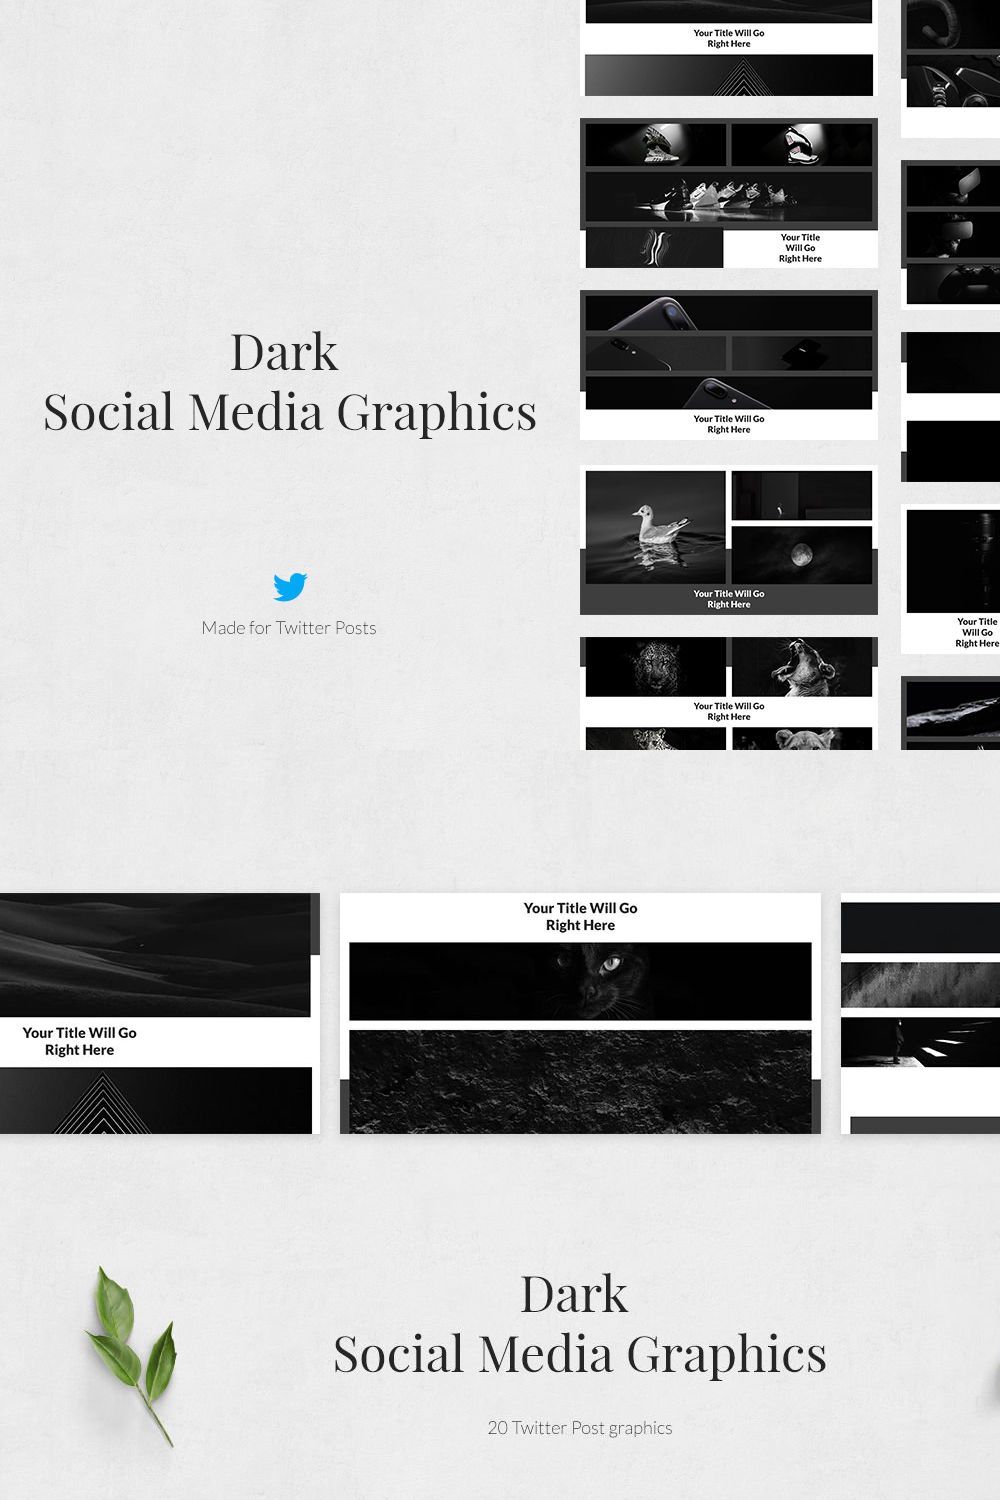 Dark Twitter Posts pinterest preview image.